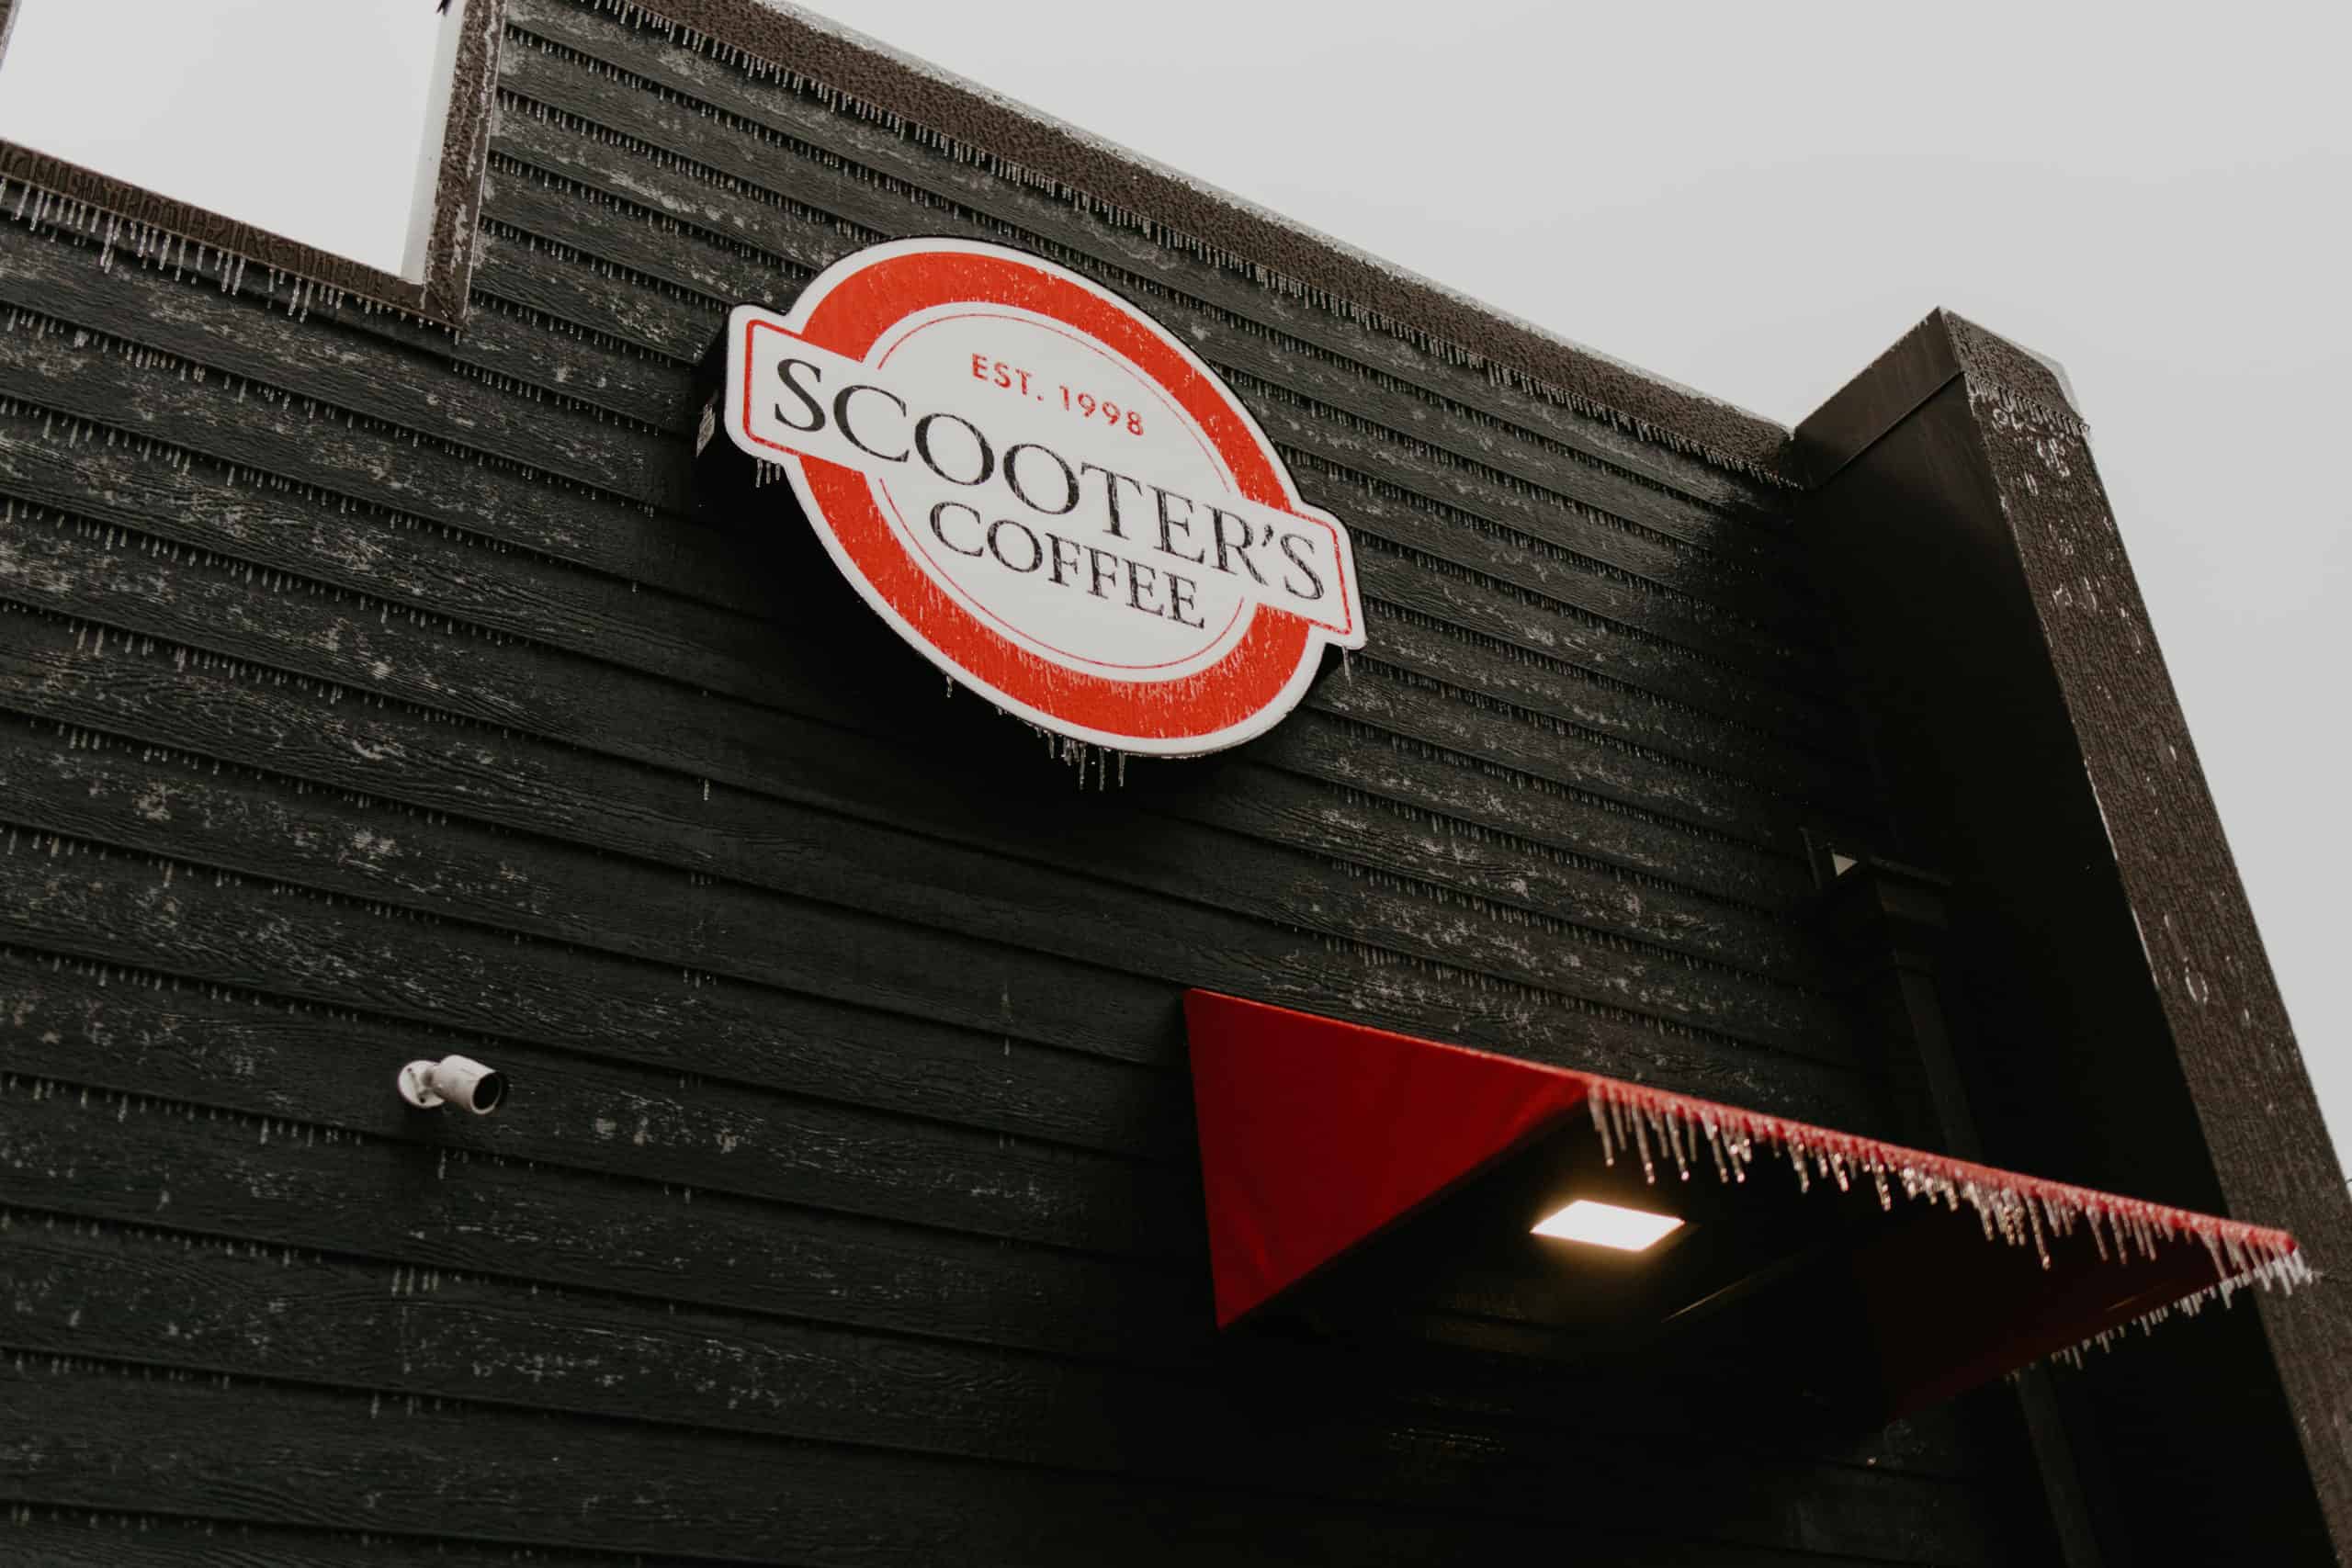 Scooter's Coffee sign on a drive-thru coffee kiosk.